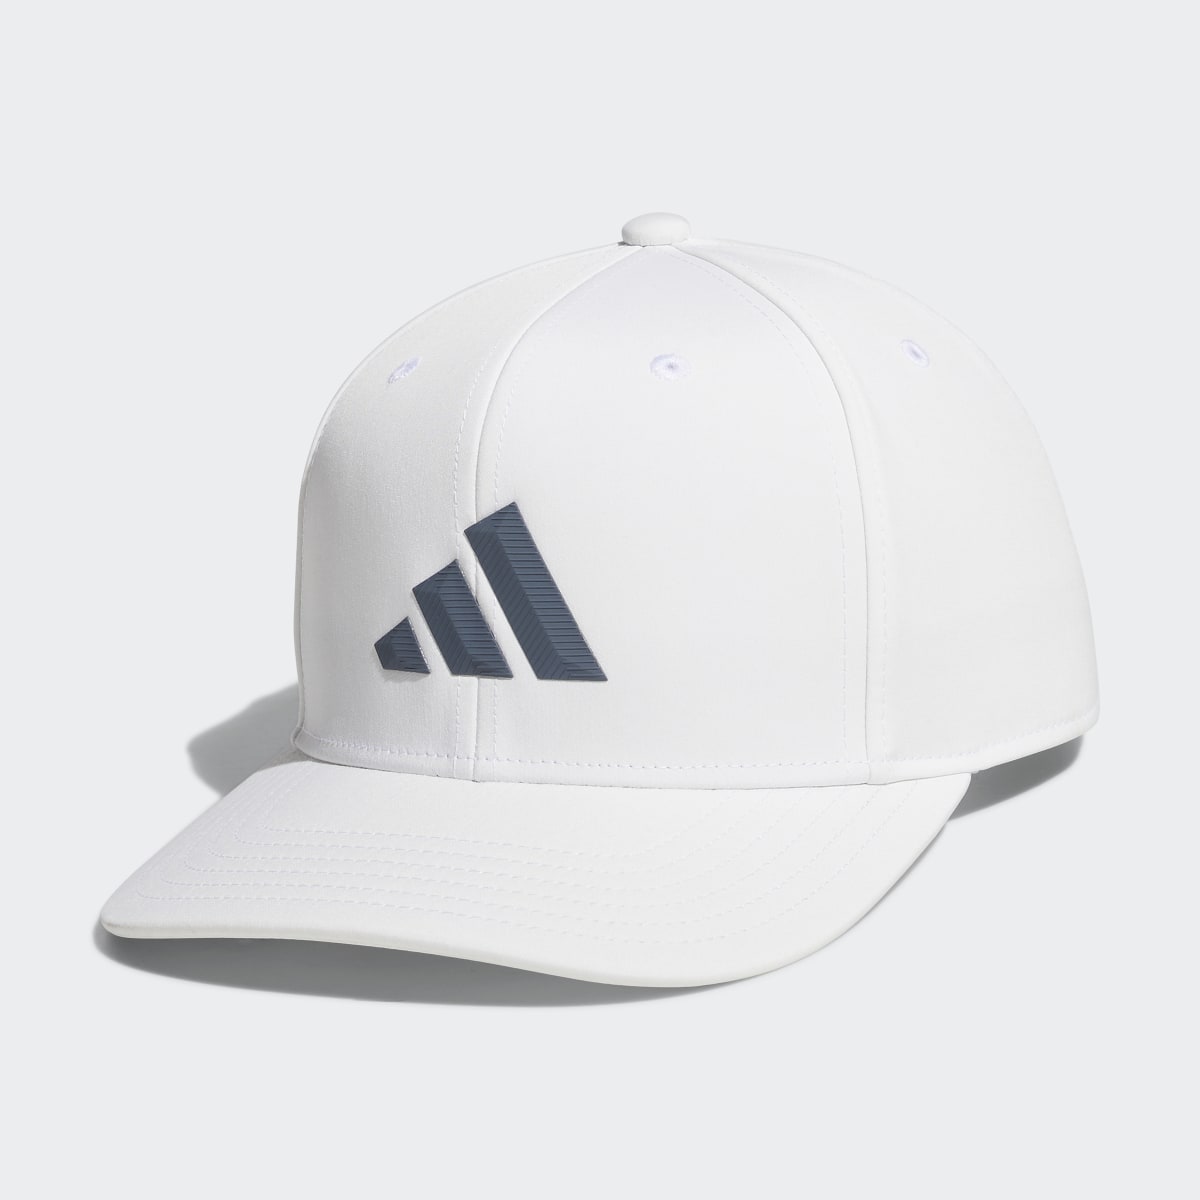 Adidas Logo Snapback Hat. 4